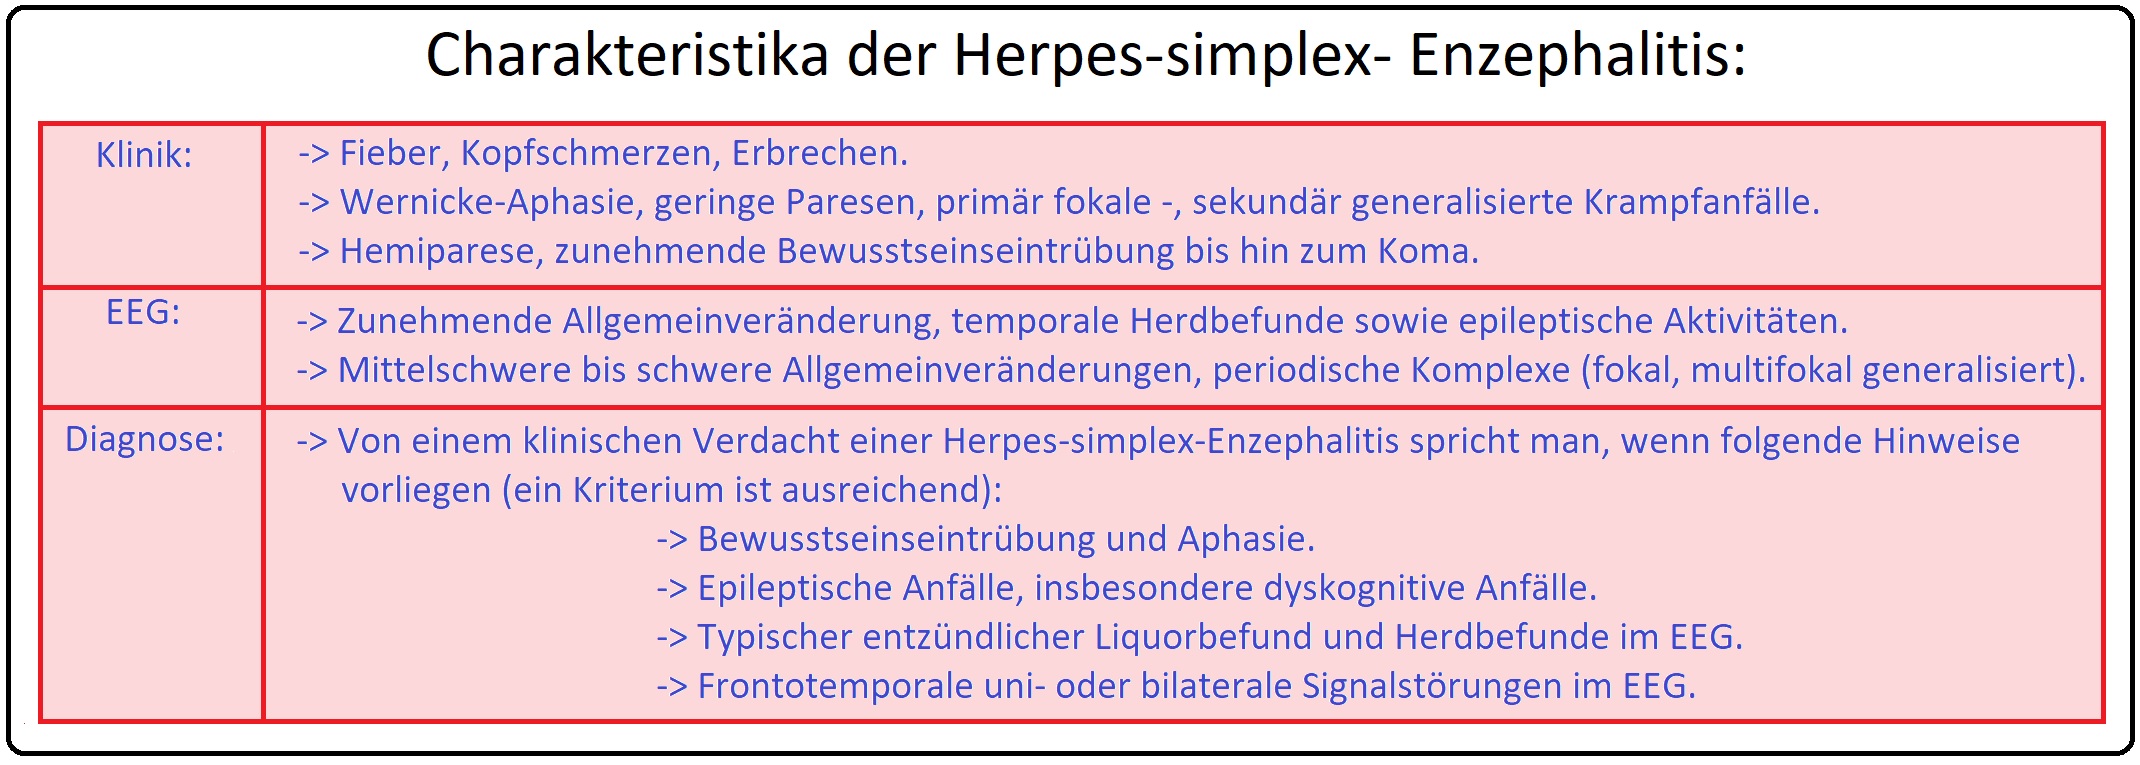 051 Charakteristika der Herpes simplex Enzephalitis